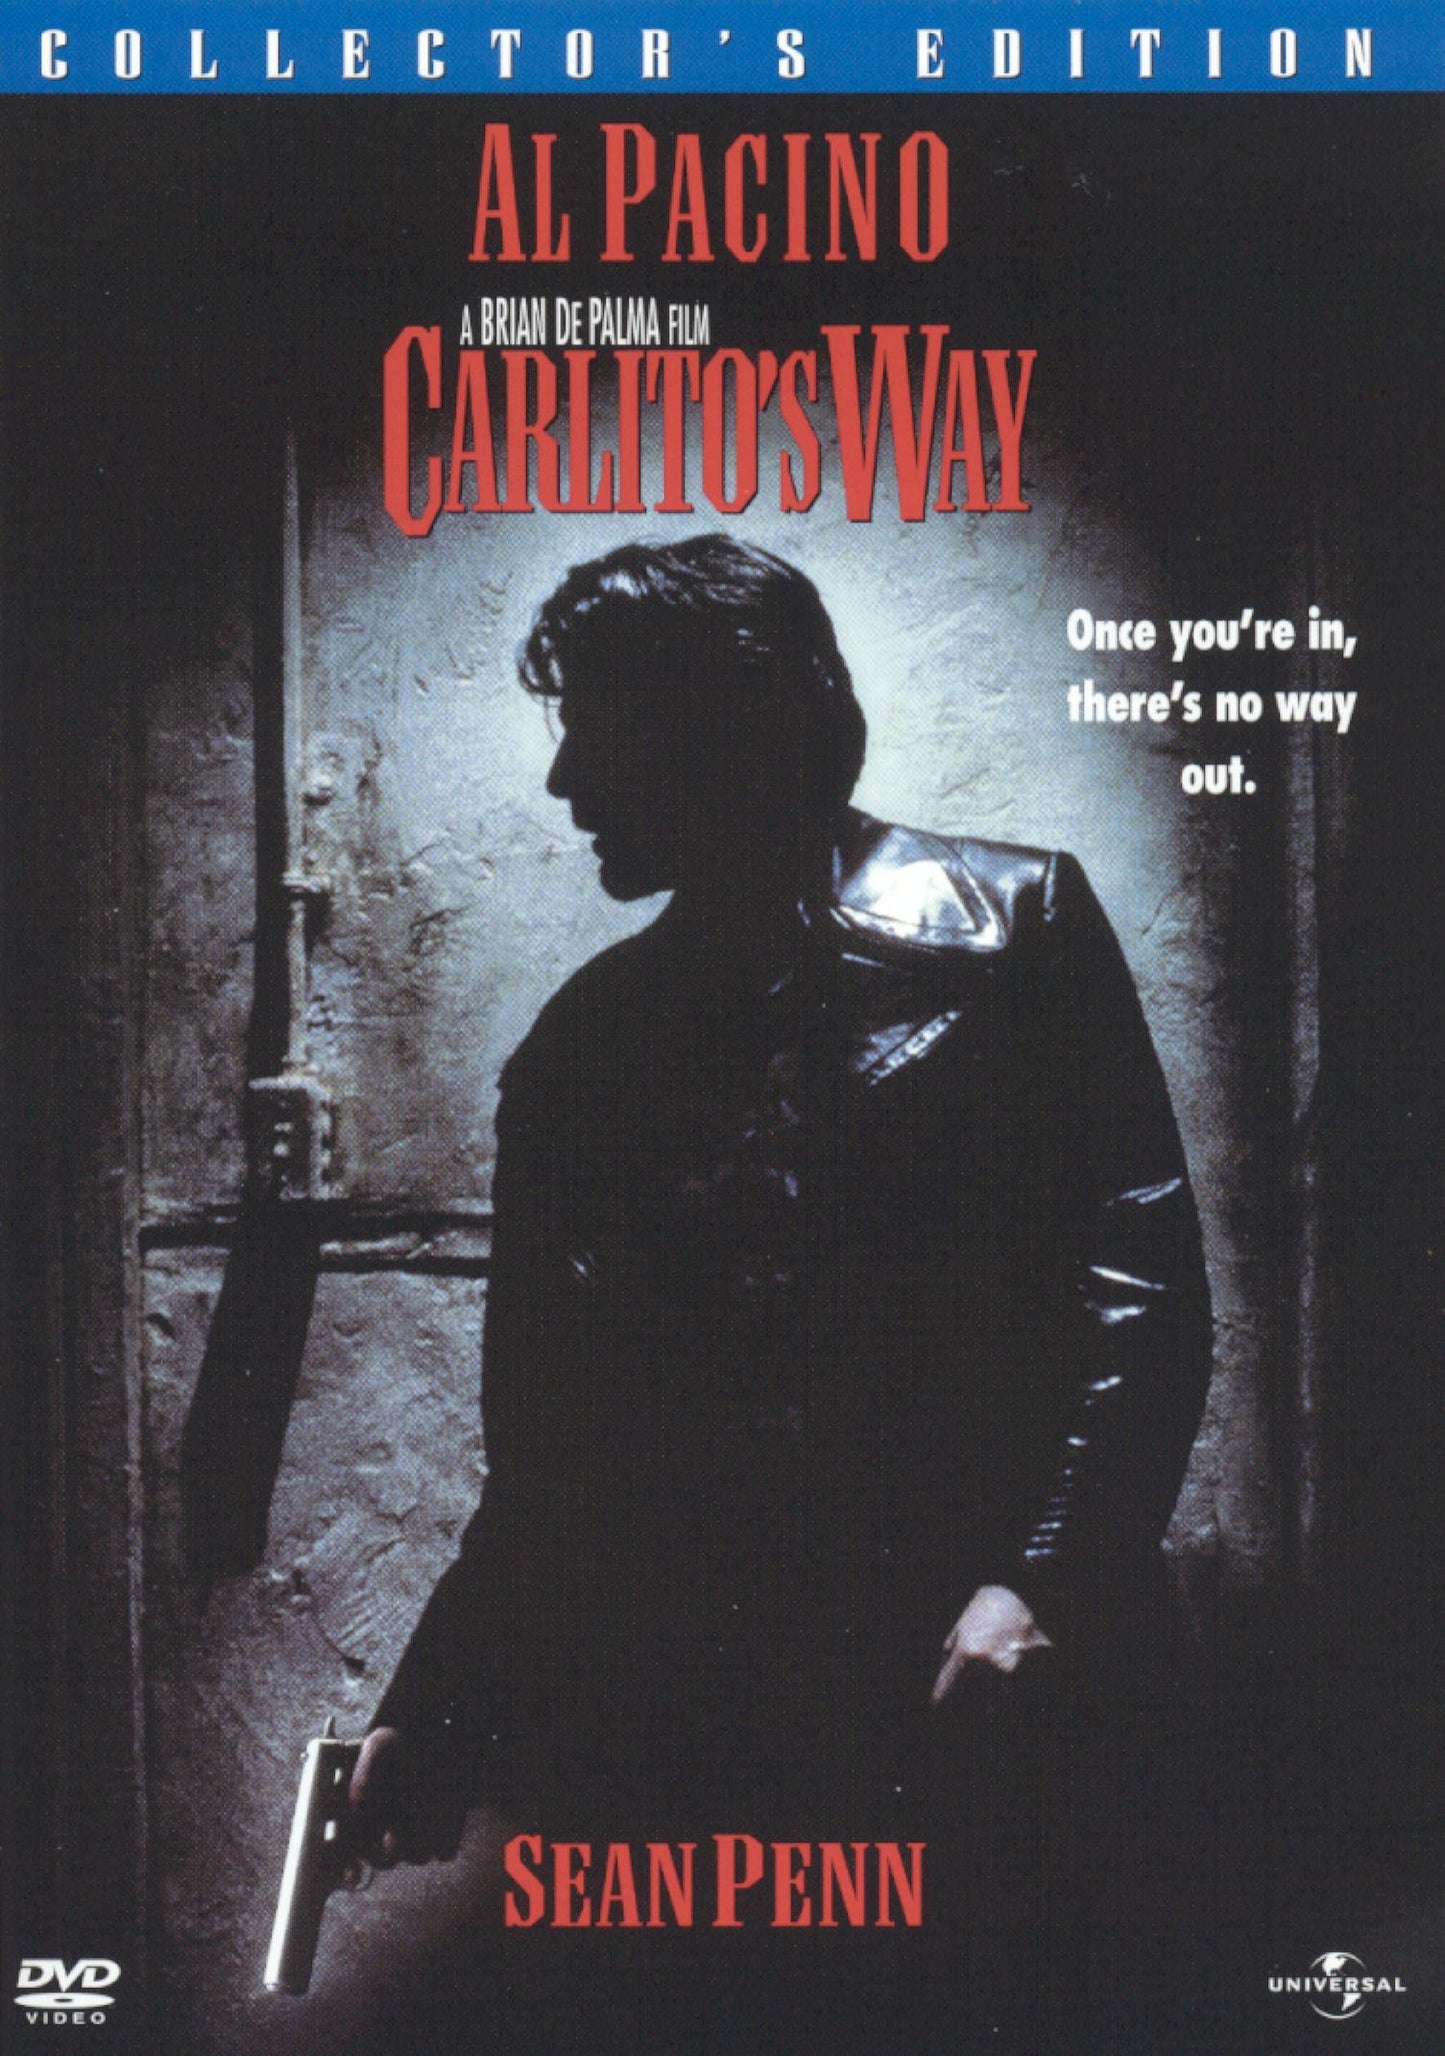 Carlito's Way [Collector's Edition] cover art